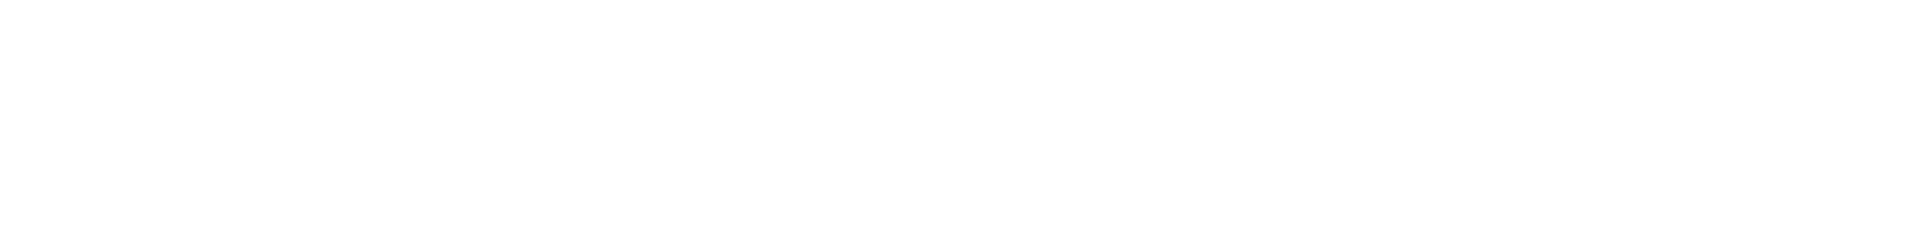 Issuer Direct Logo